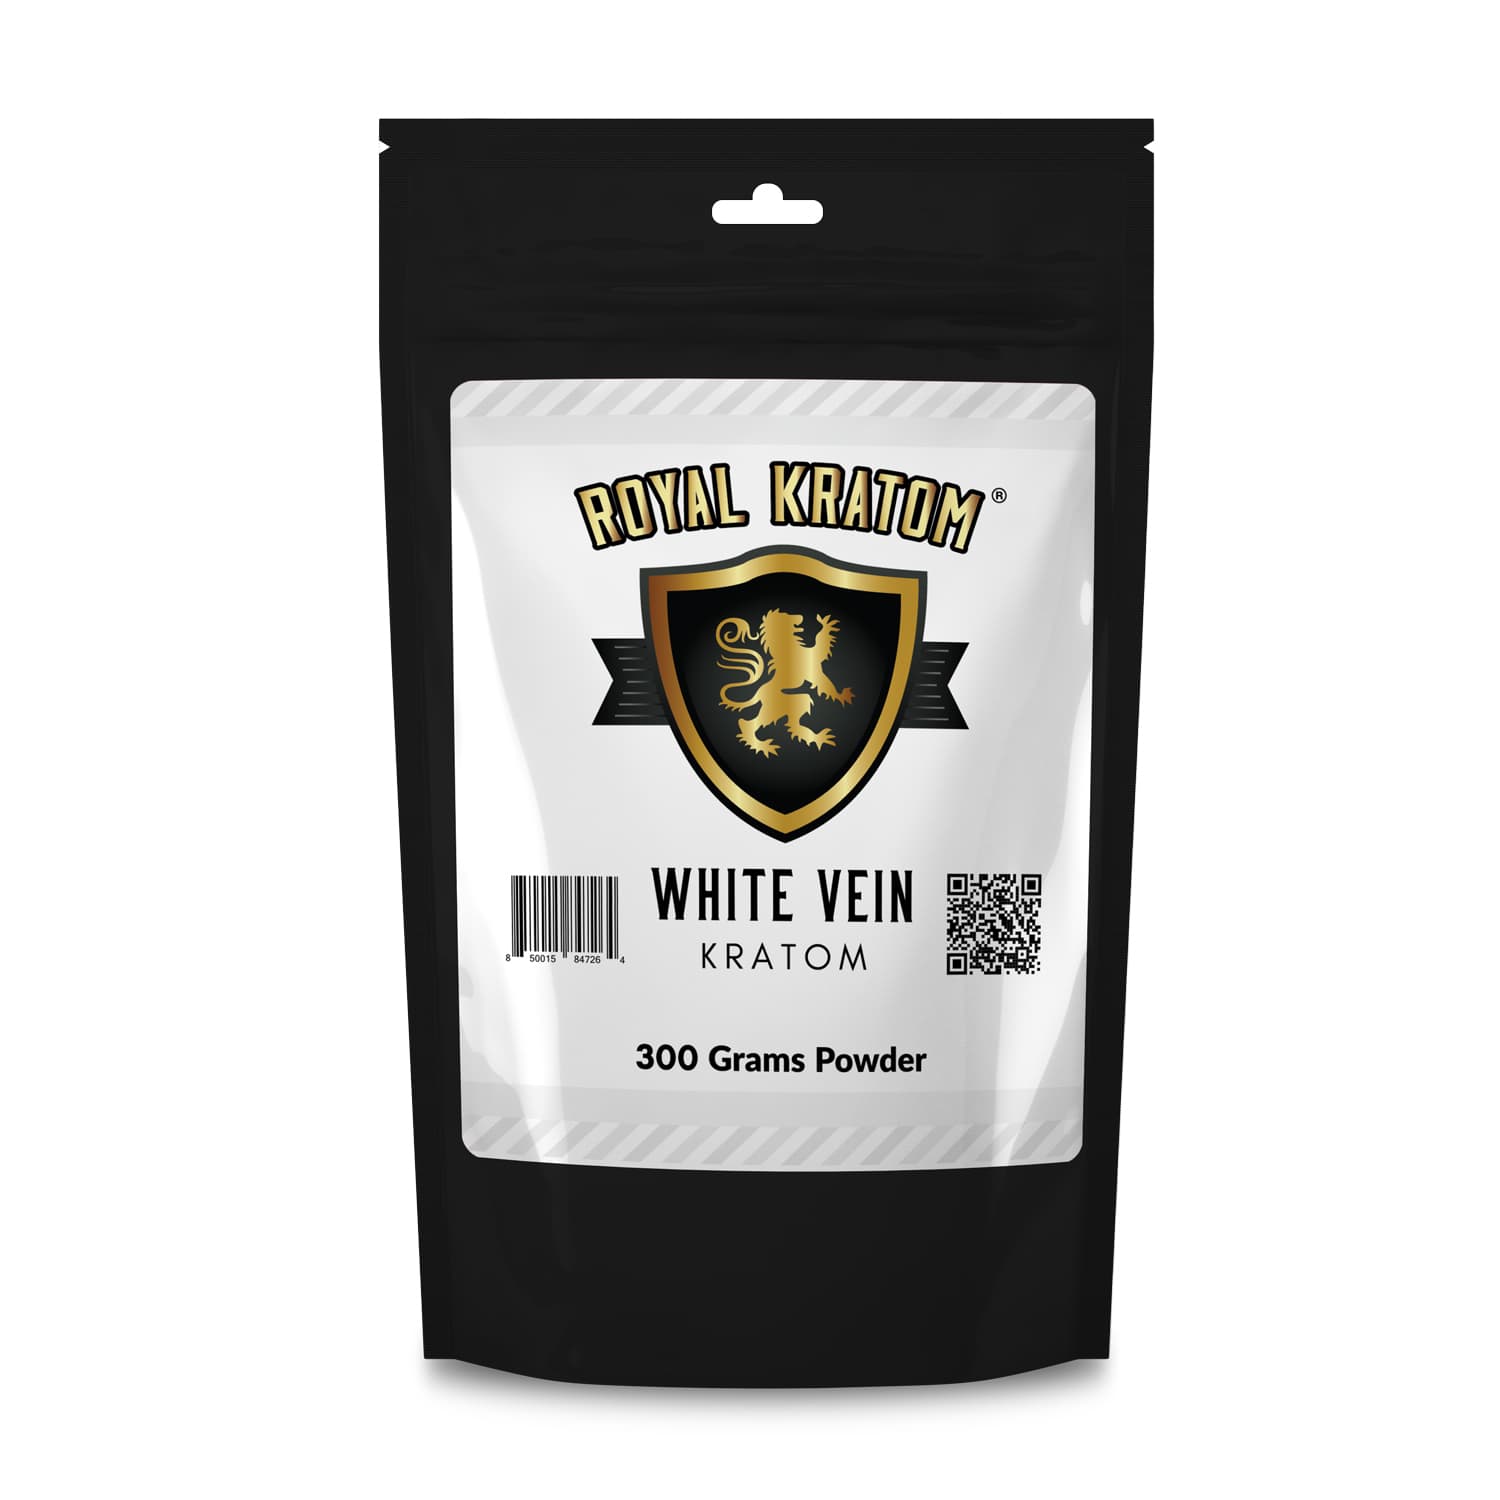 White Vein Kratom Powder 300 Grams front of package